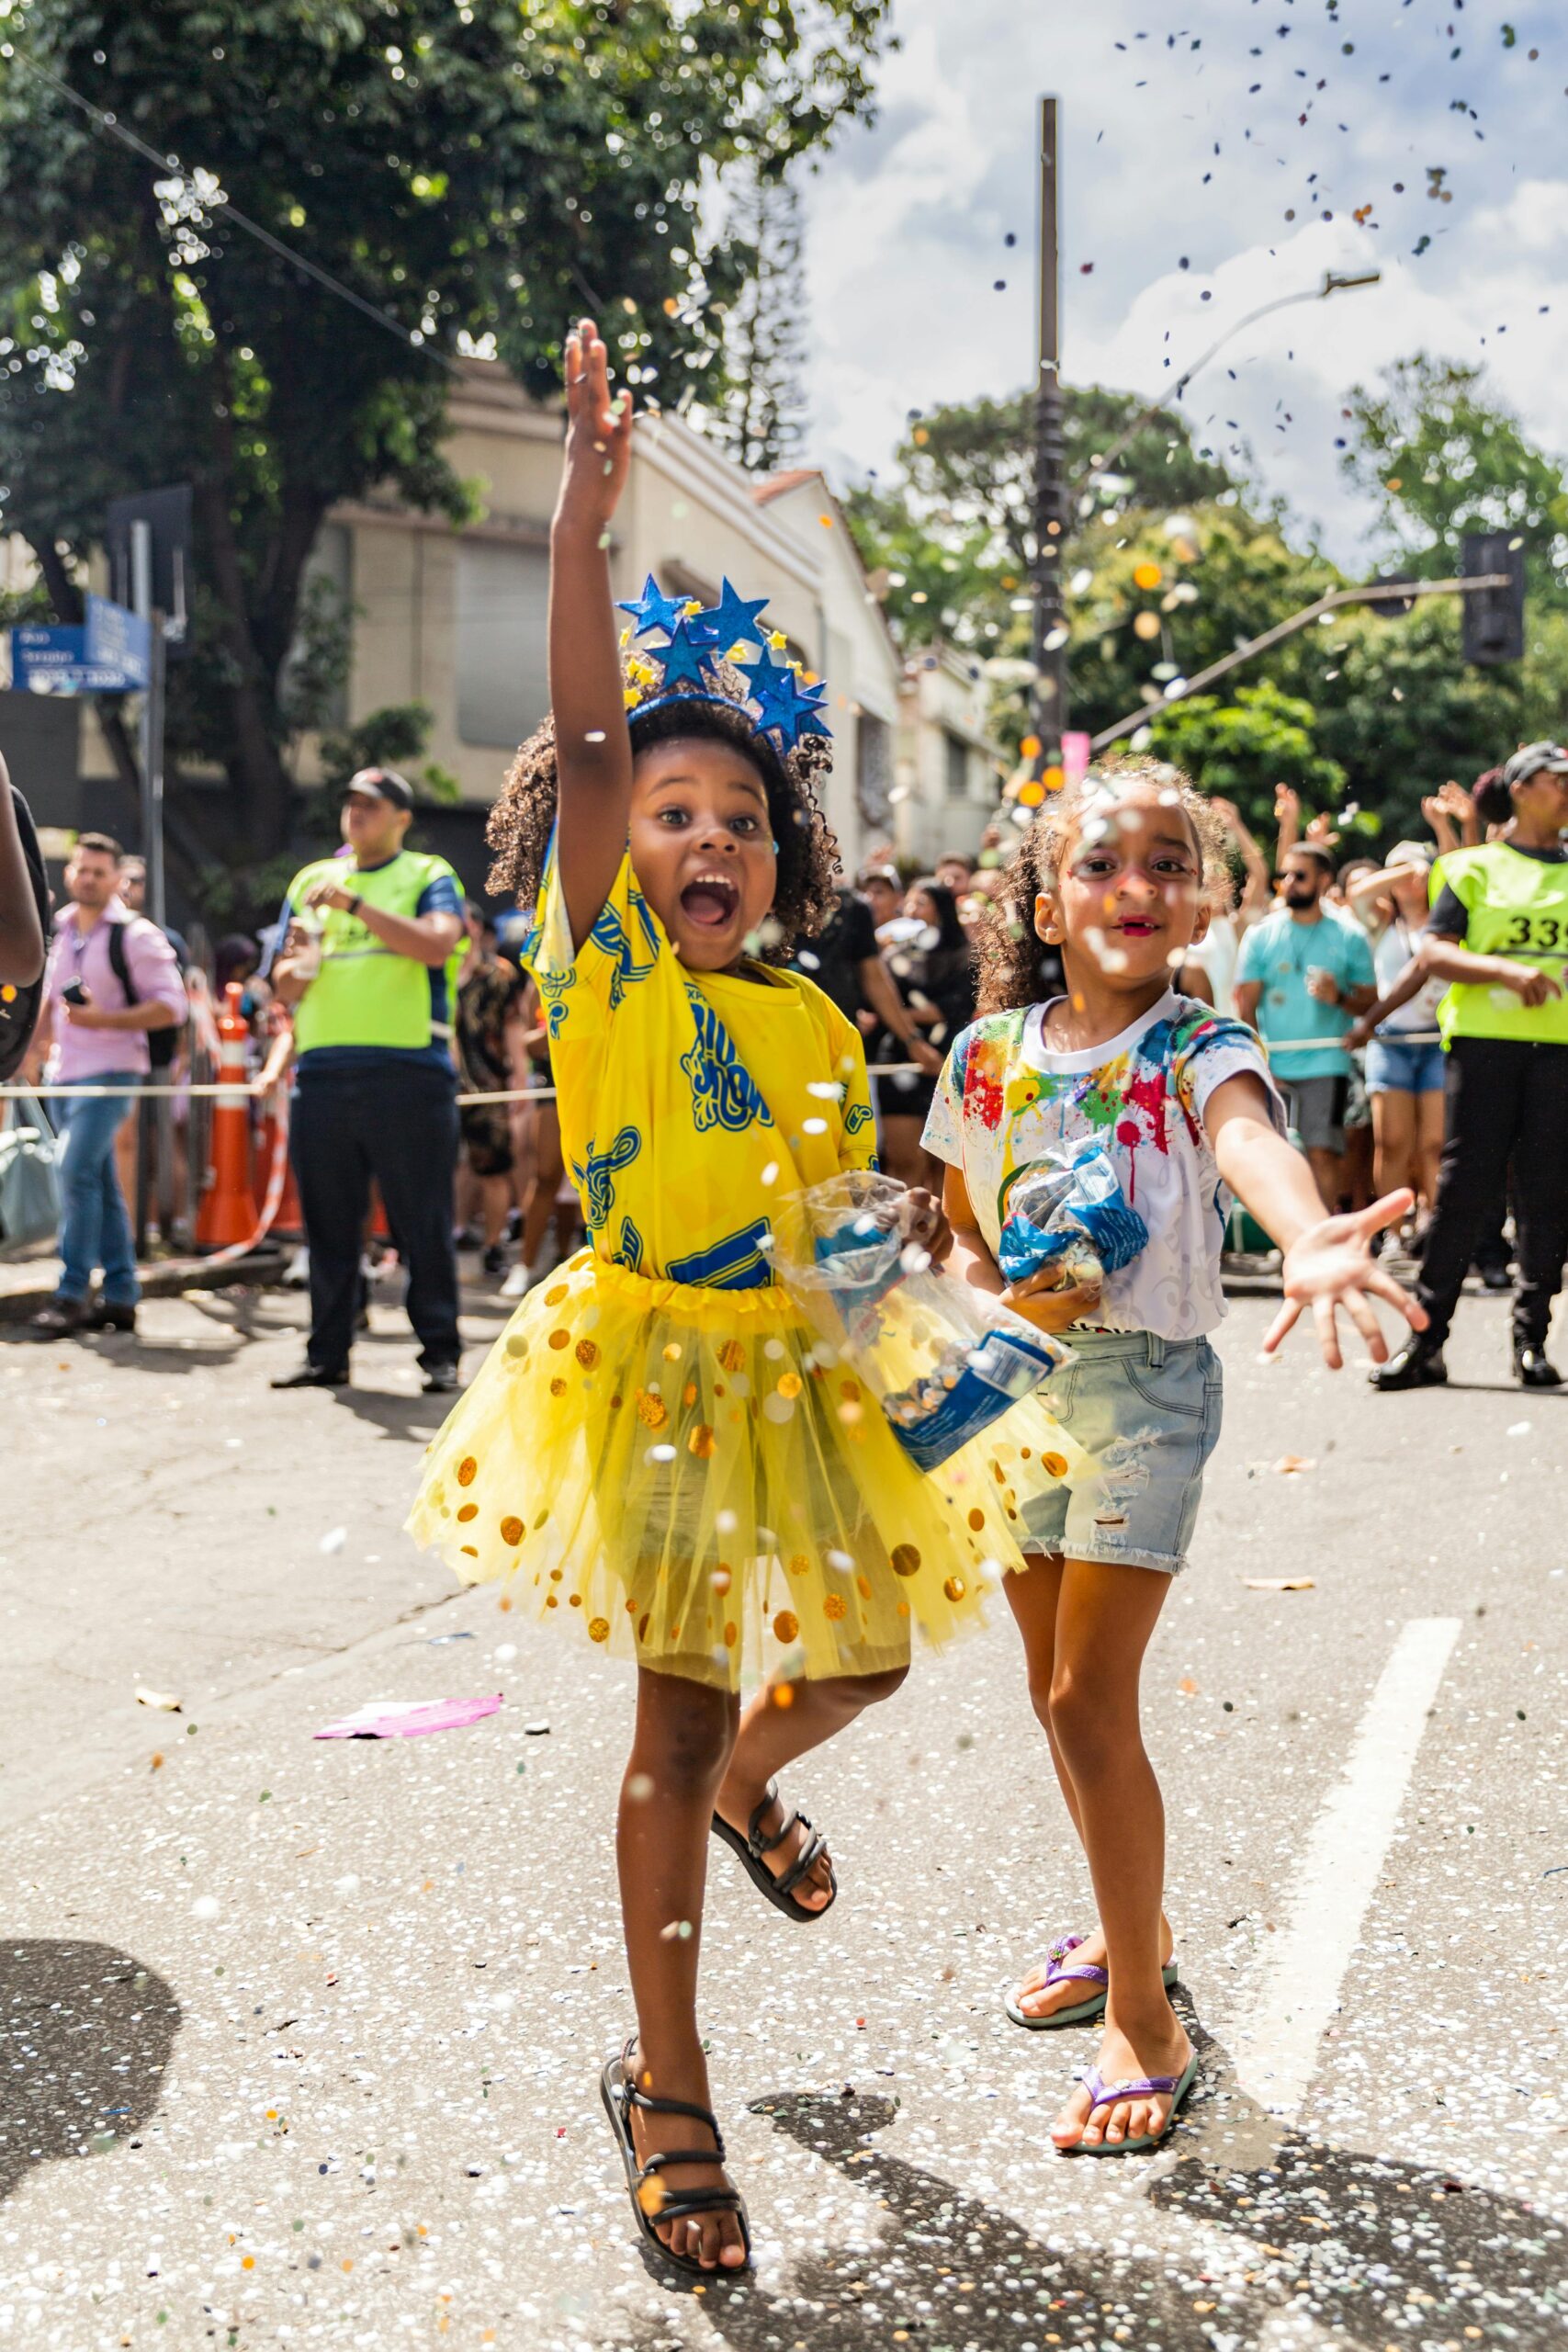 Children celebrating during a festival on the street